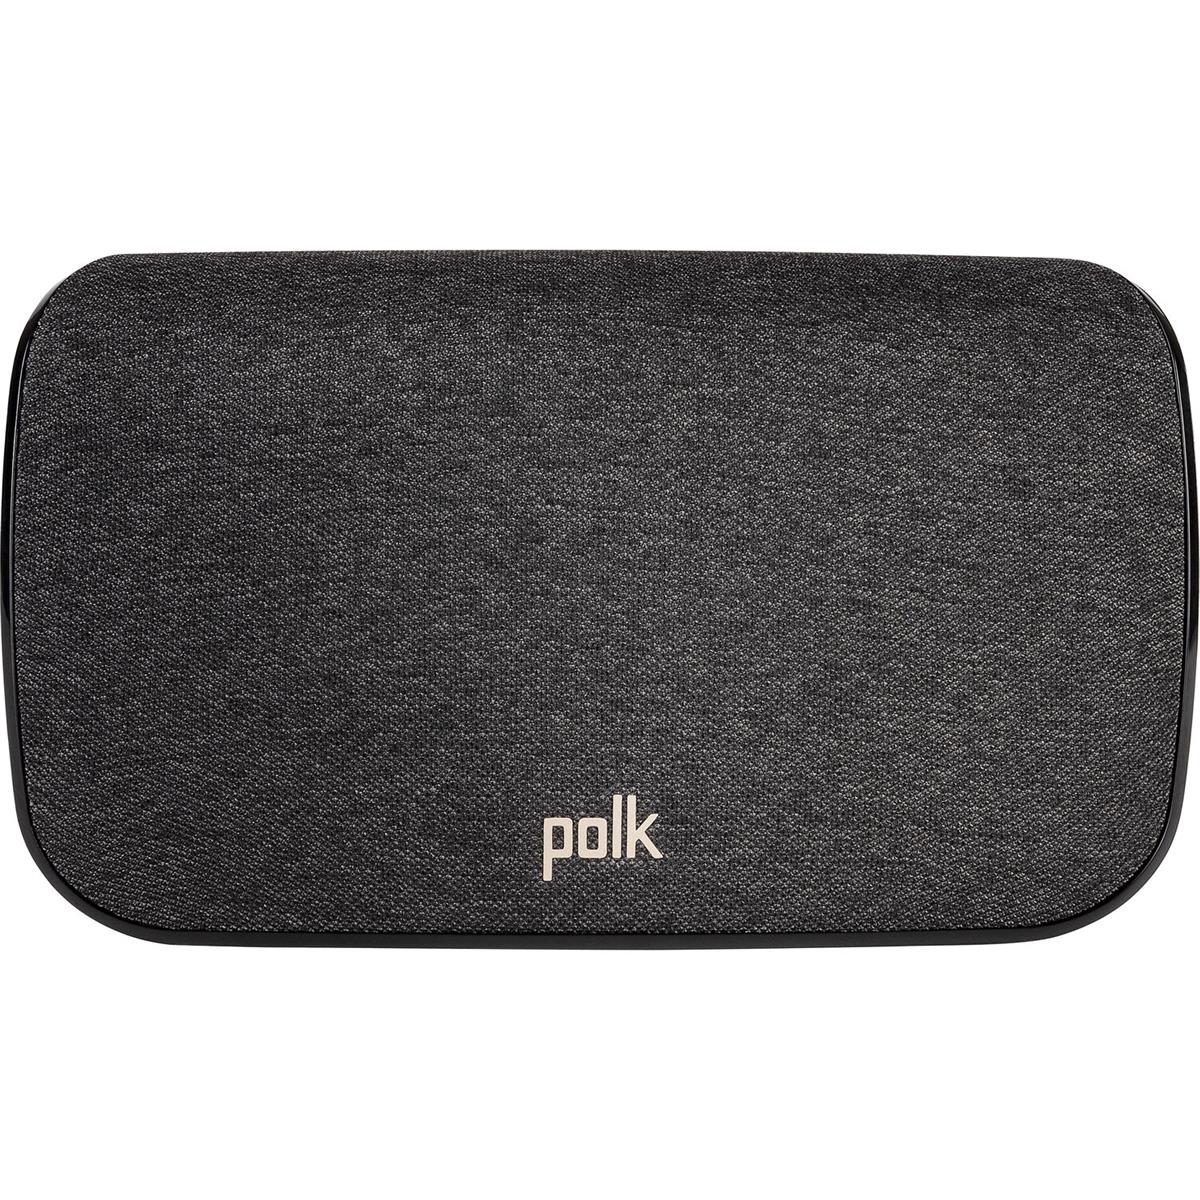 Polk Audio SR2 Wireless Surround Speakers для некоторых саундбаров Polk, пара, черный